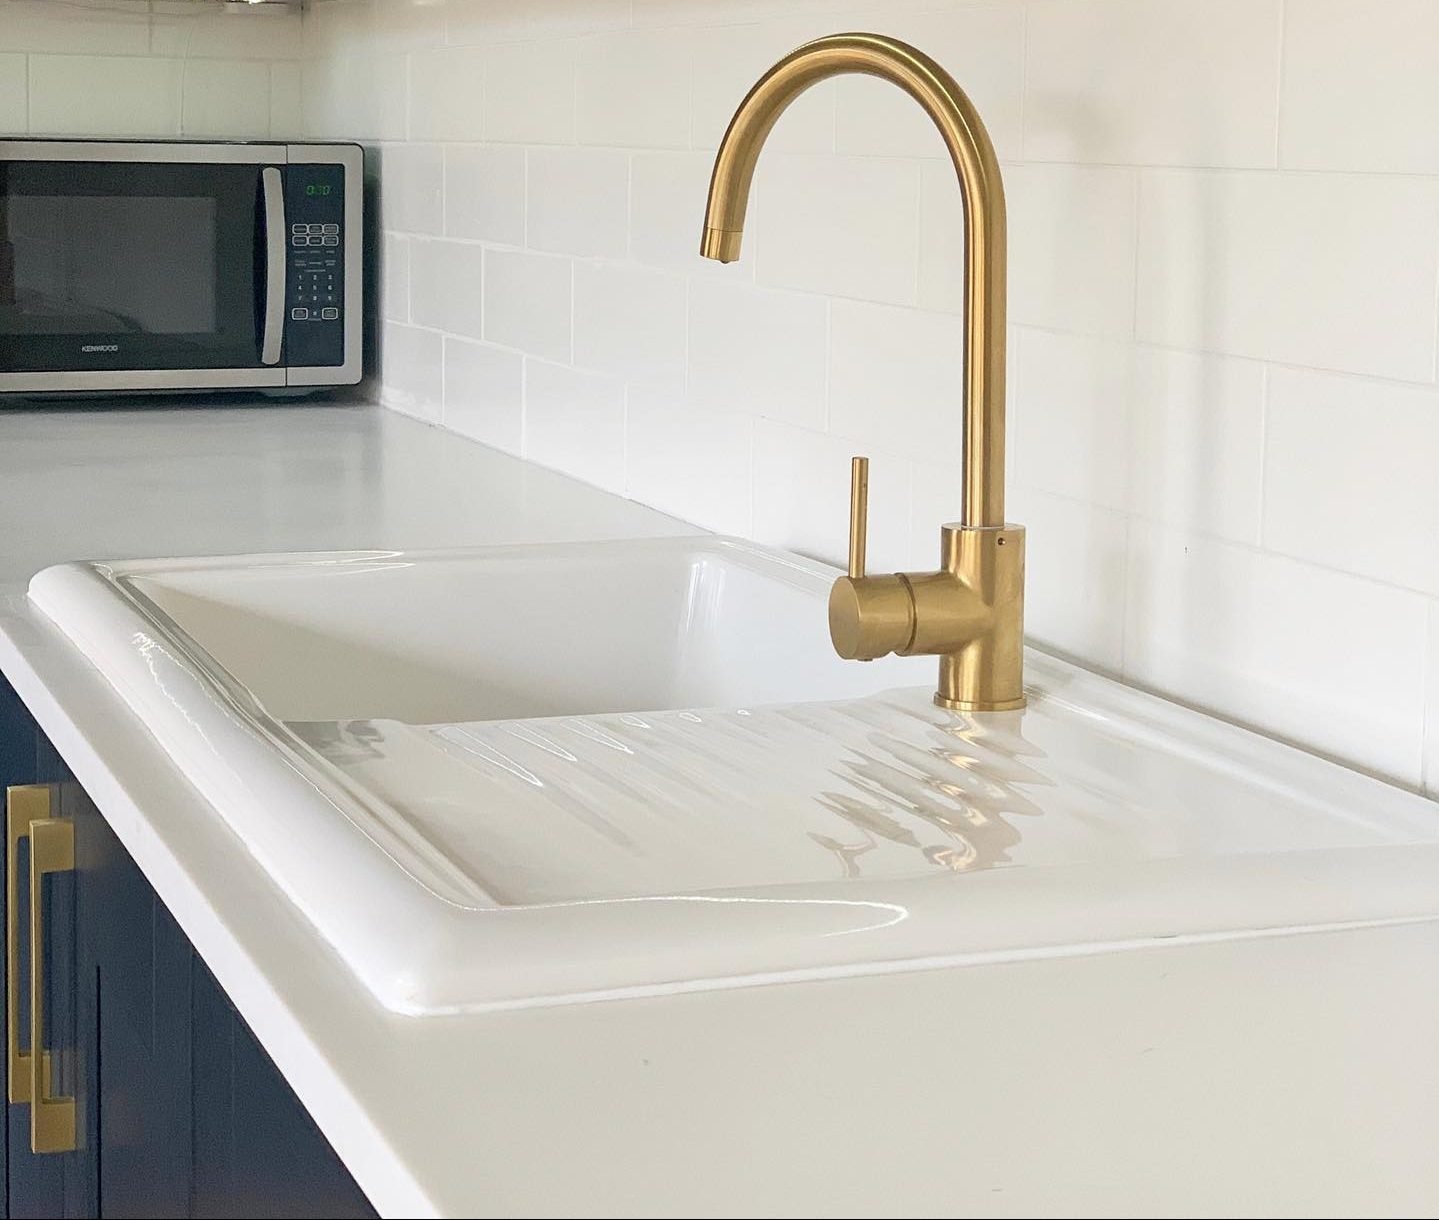 Quartz Worktop with gold kitchen tap and fixtures